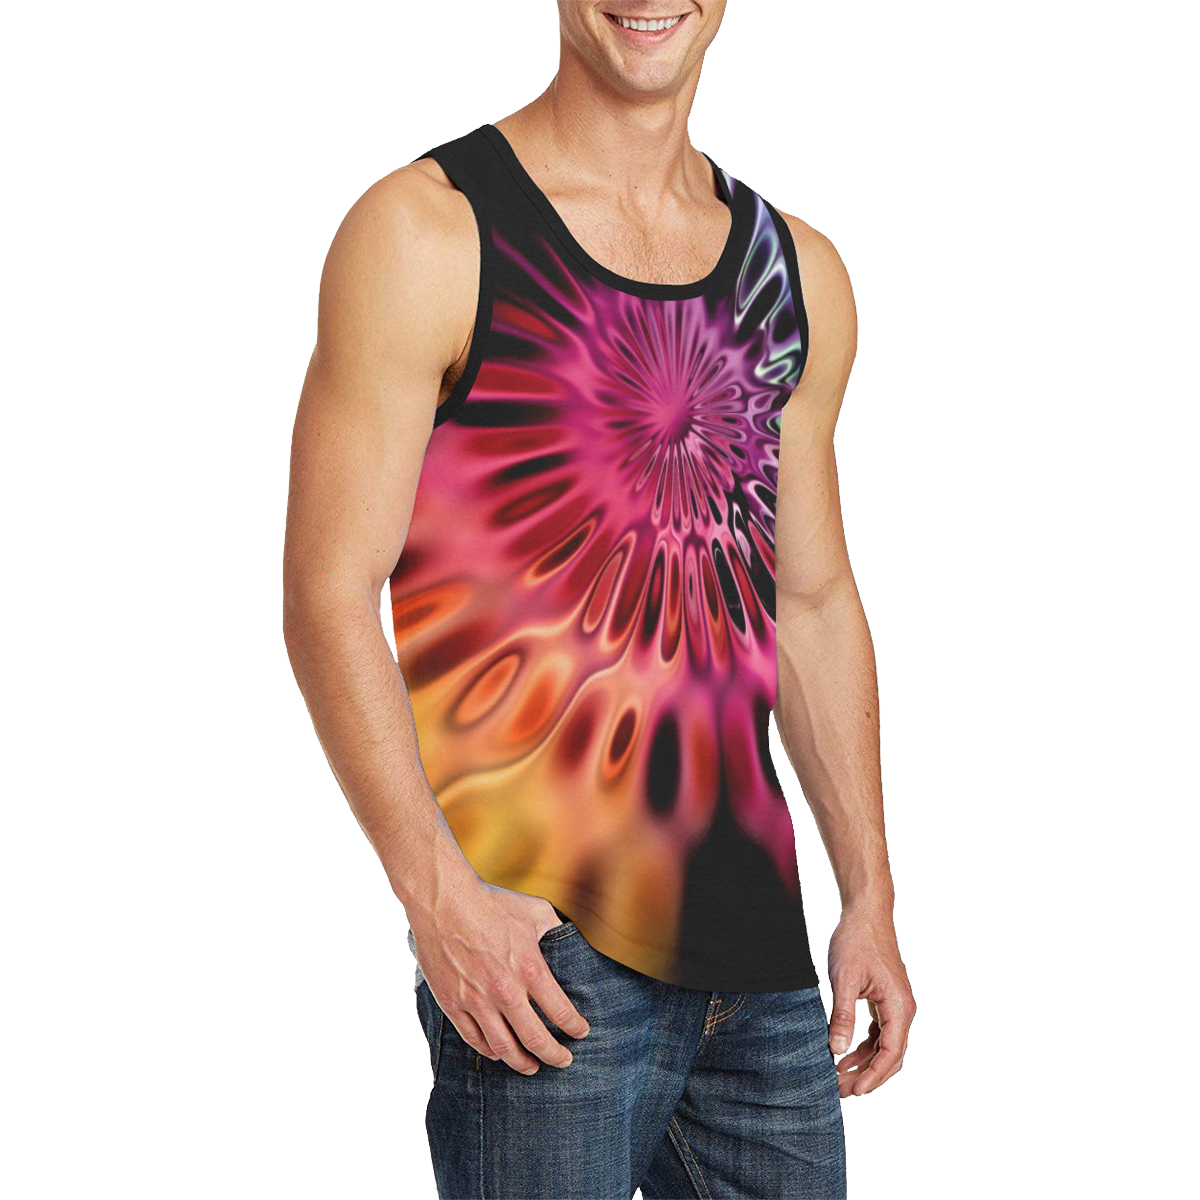 Magic Flower Flames Fractal - Psychedelic Colors Men's All Over Print Tank Top (Model T57)